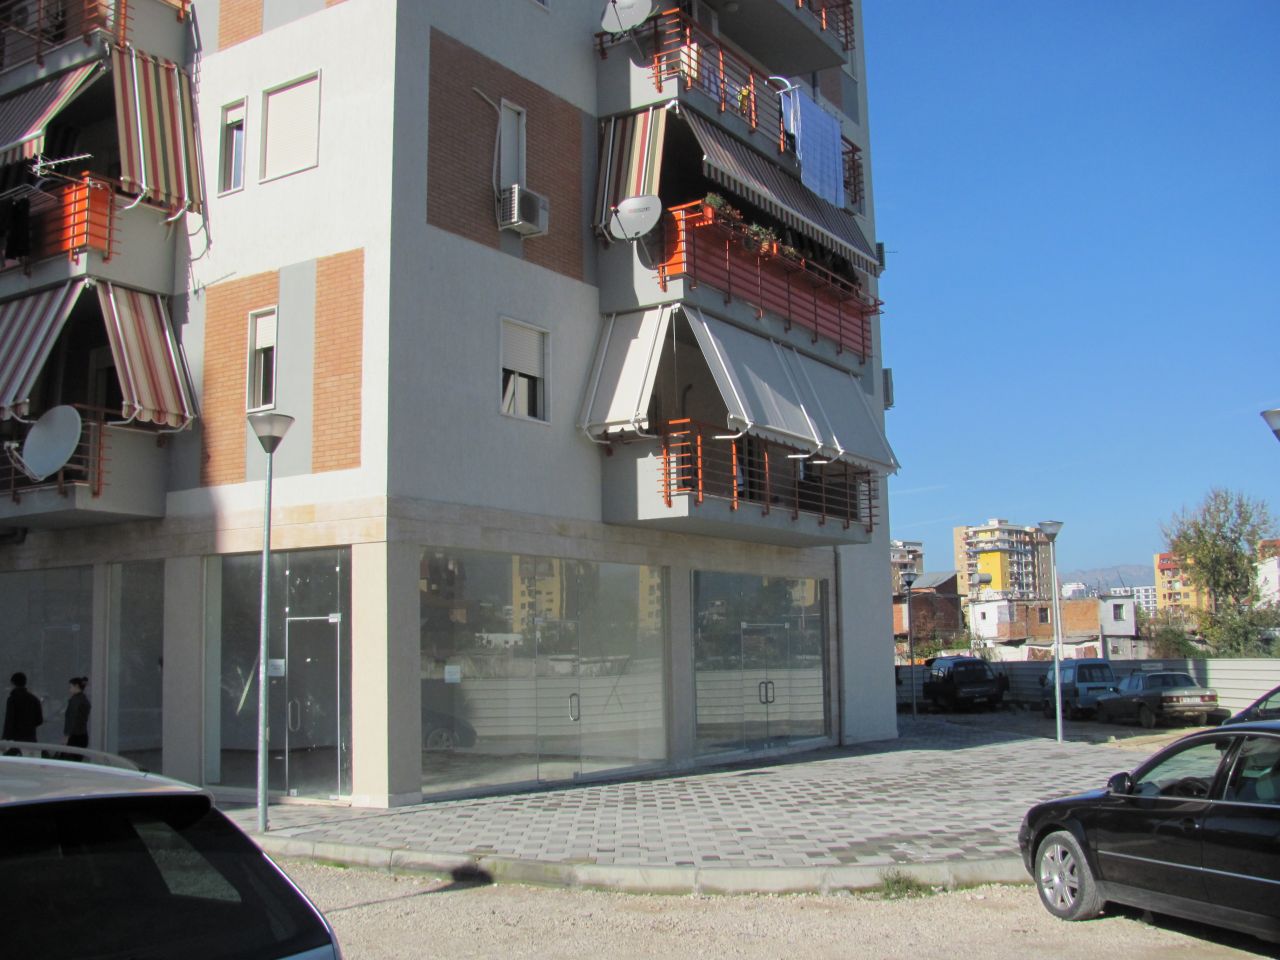 Albania Real Estate in Tirana. Finished Property in Albania offered by Albania Property Group